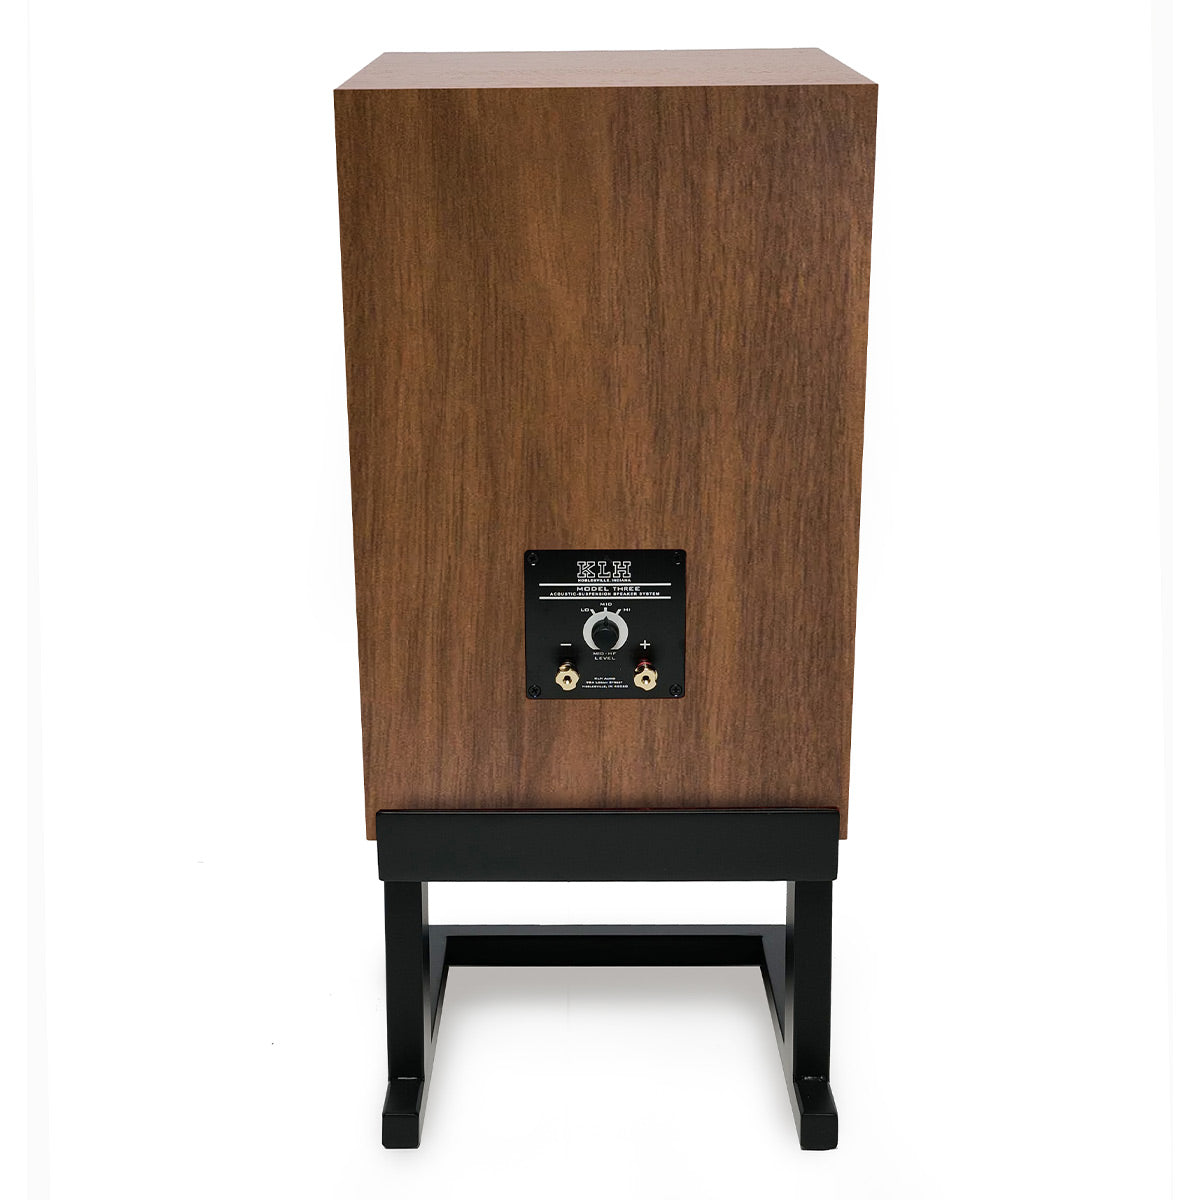 KLH Model Three 2-way 8-inch Acoustic Suspension Bookshelf Speaker - Each (English Walnut)